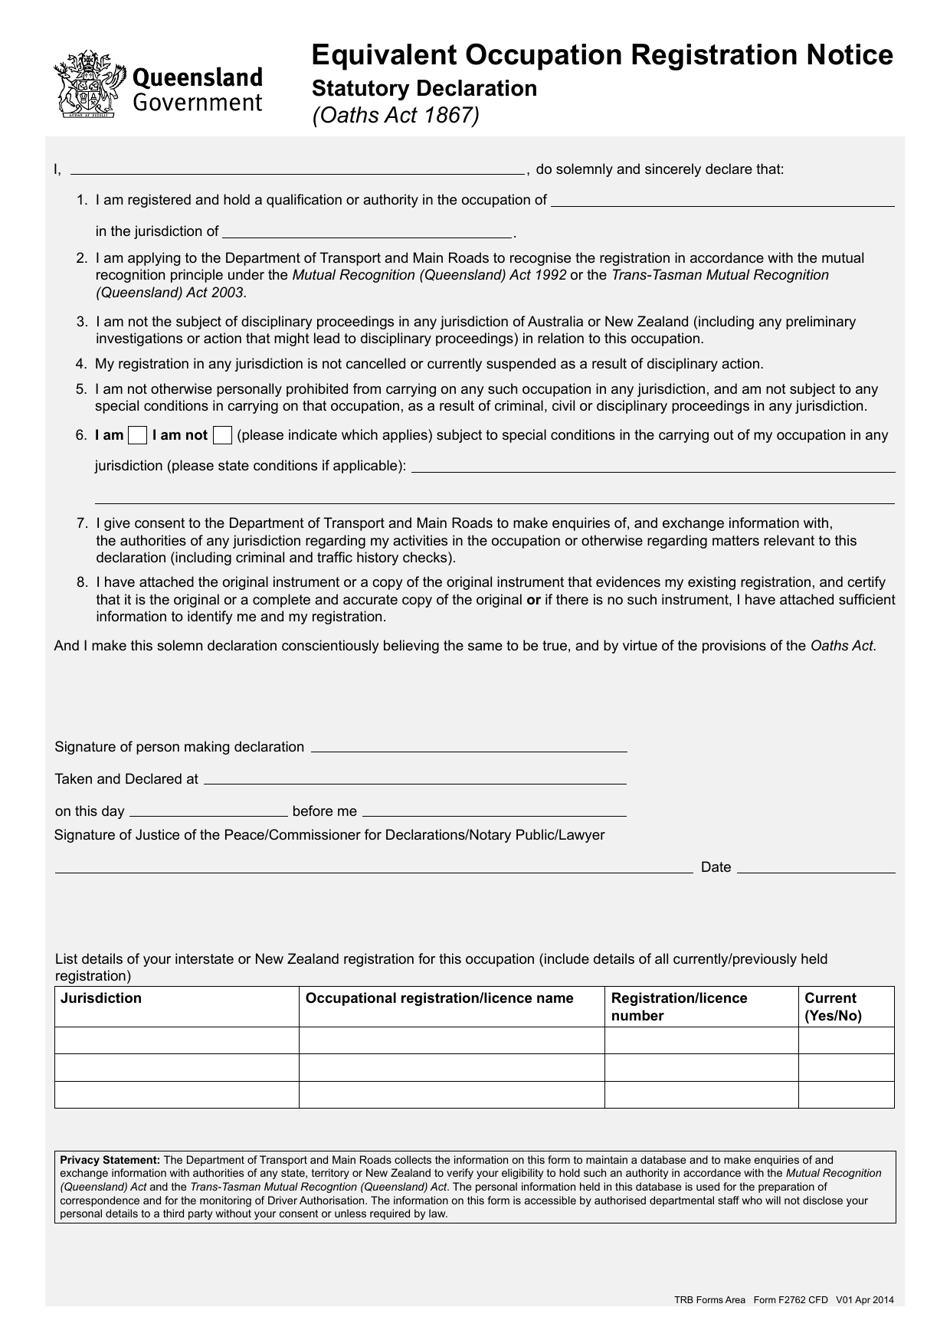 Form F2762 Equivalent Occupation Registration Notice - Queensland, Australia, Page 1